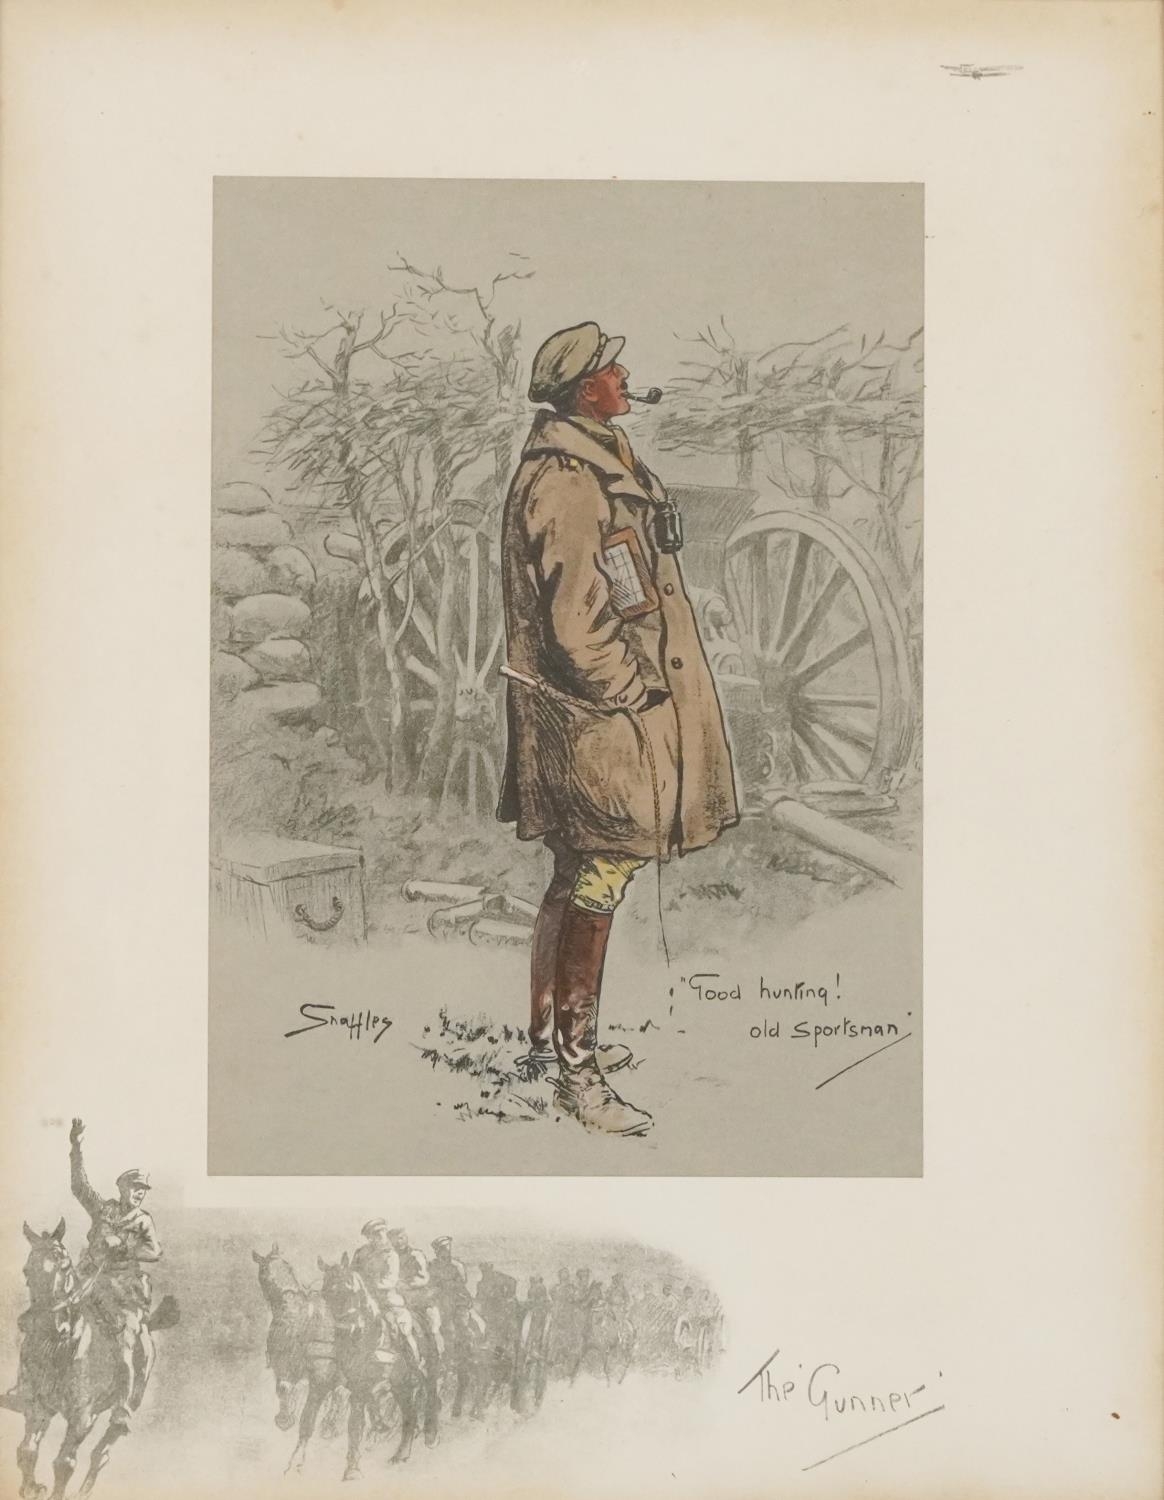 Good Hunting Old Sportsman the Gunner - World War I interest Snaffles print, framed in